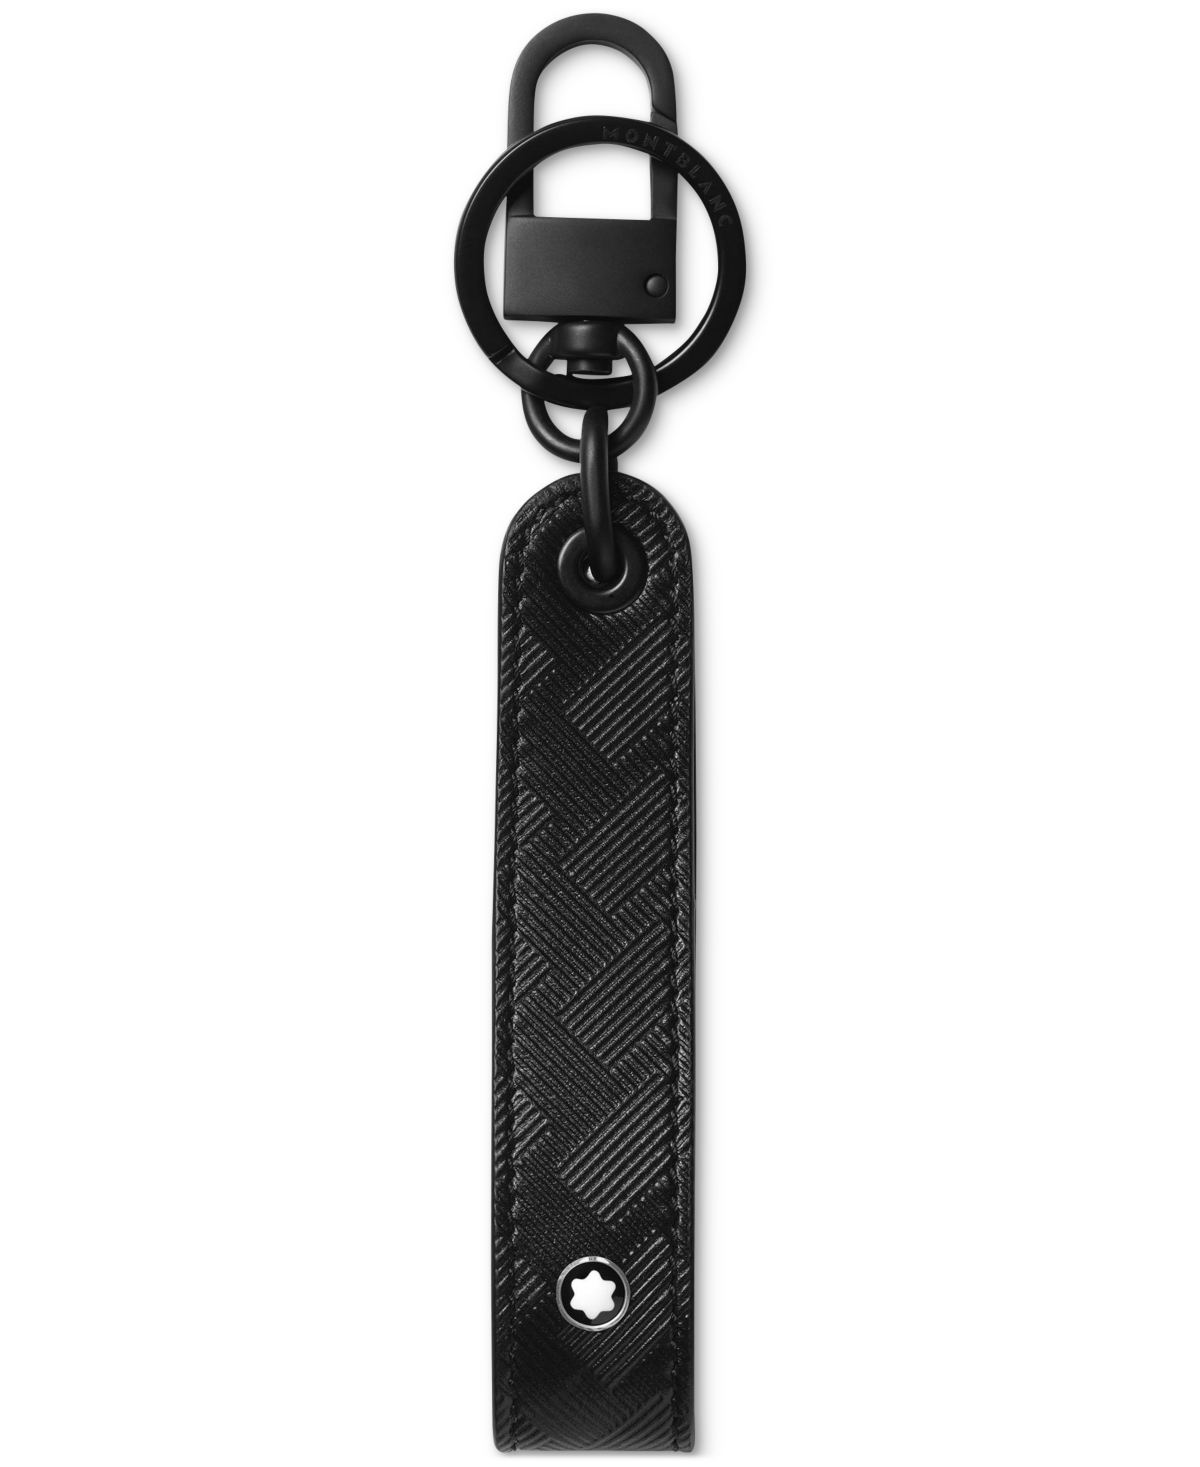 Montblanc Extreme 3.0 Key Fob In Black